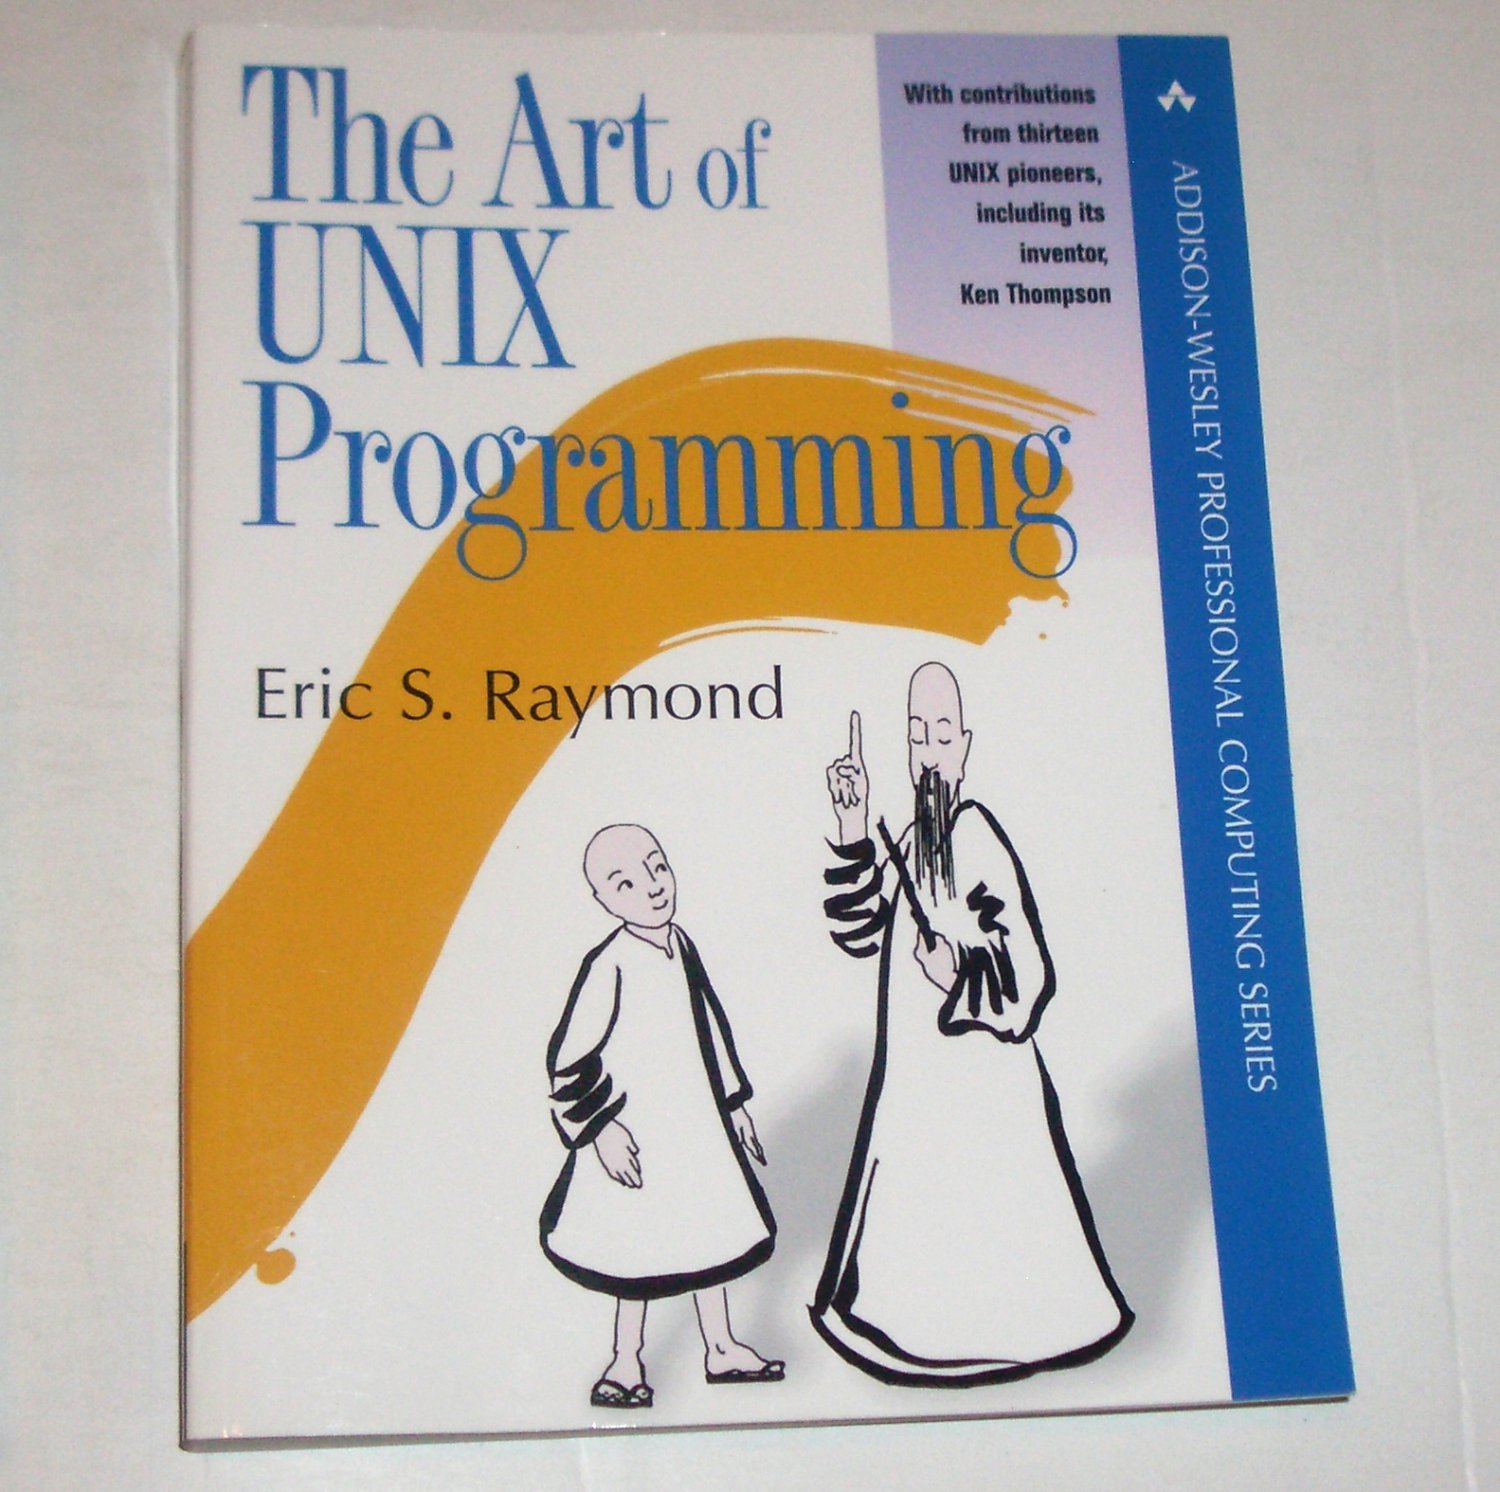 Art of UNIX Programming by Eric S. Raymond